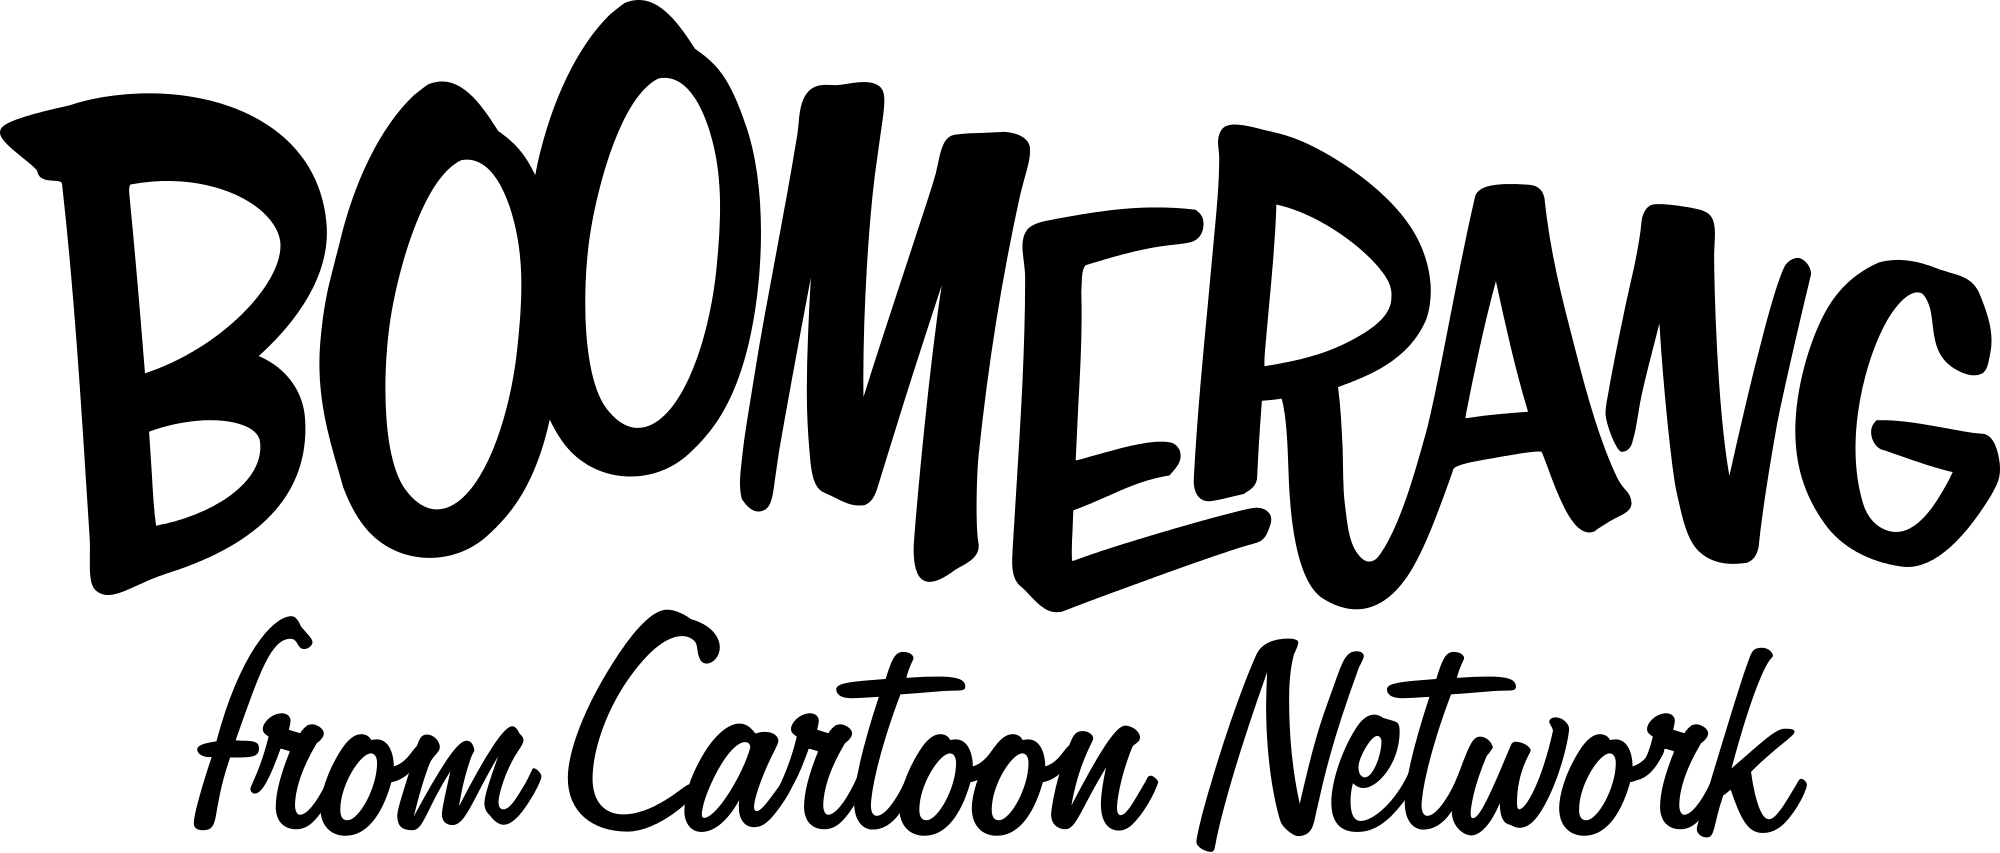 Boomerang From Cartoon Network Logo - File:Boomerang from Cartoon Network logo.svg - Wikimedia Commons